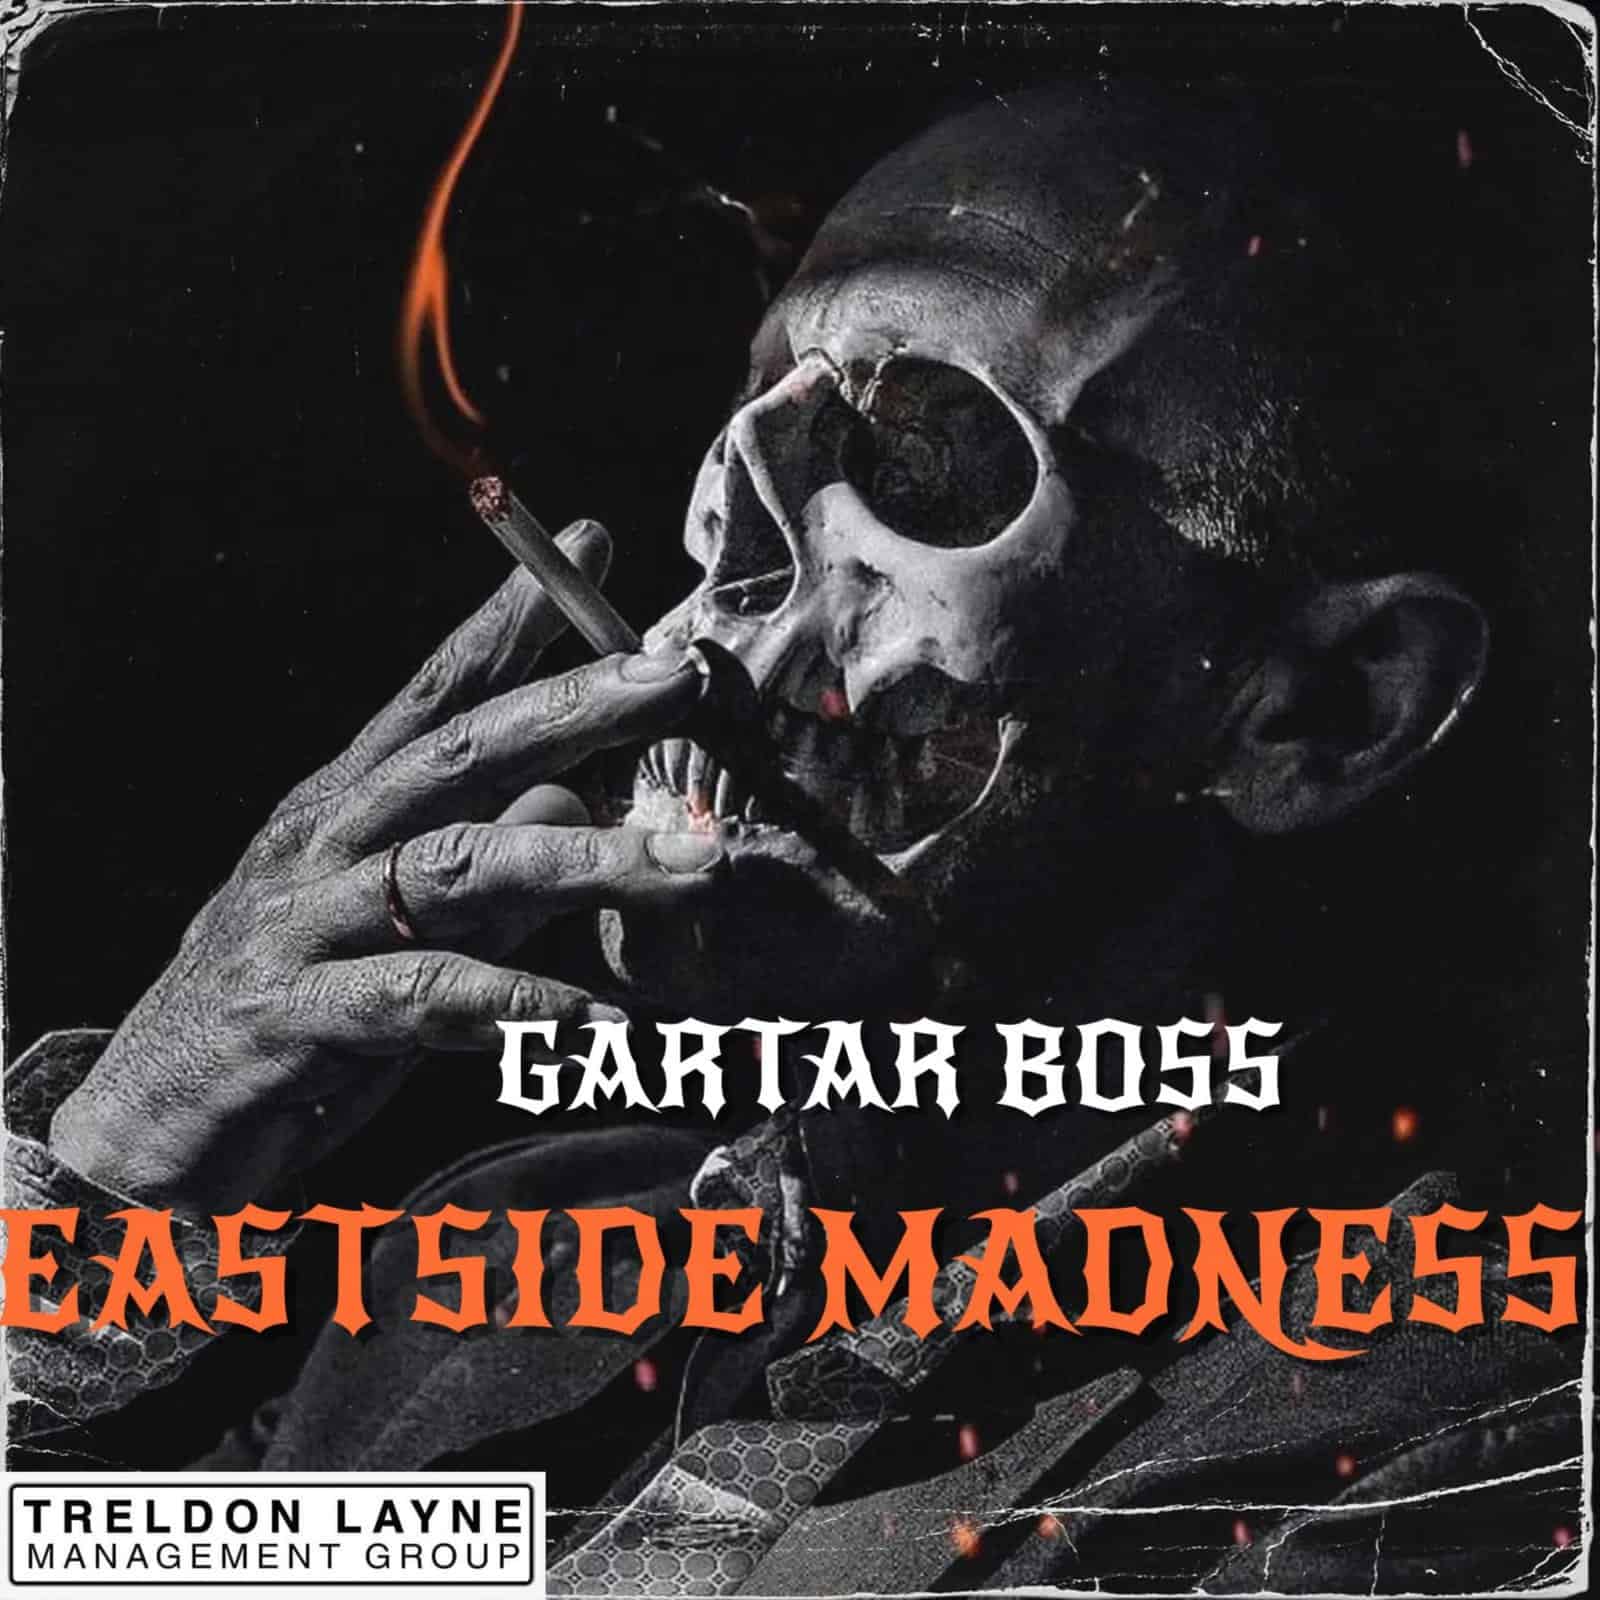 Gartar Boss - Eastside Madness